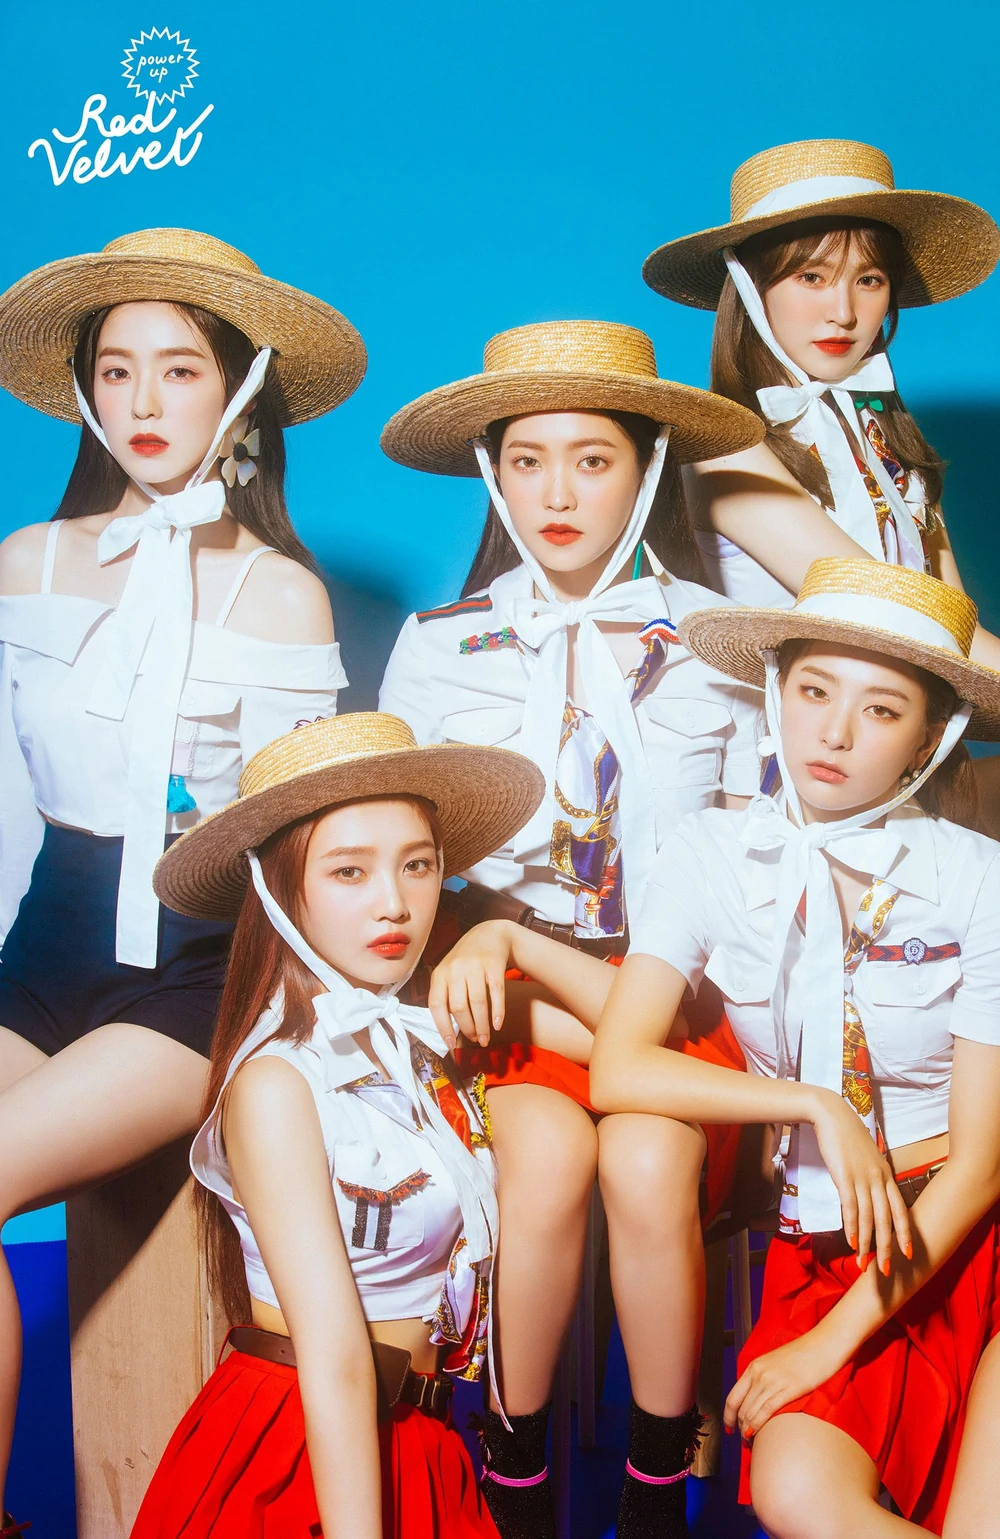 Red Velvet Summer Magic Group Concept Teaser Picture Image Photo Kpop K-Concept 4